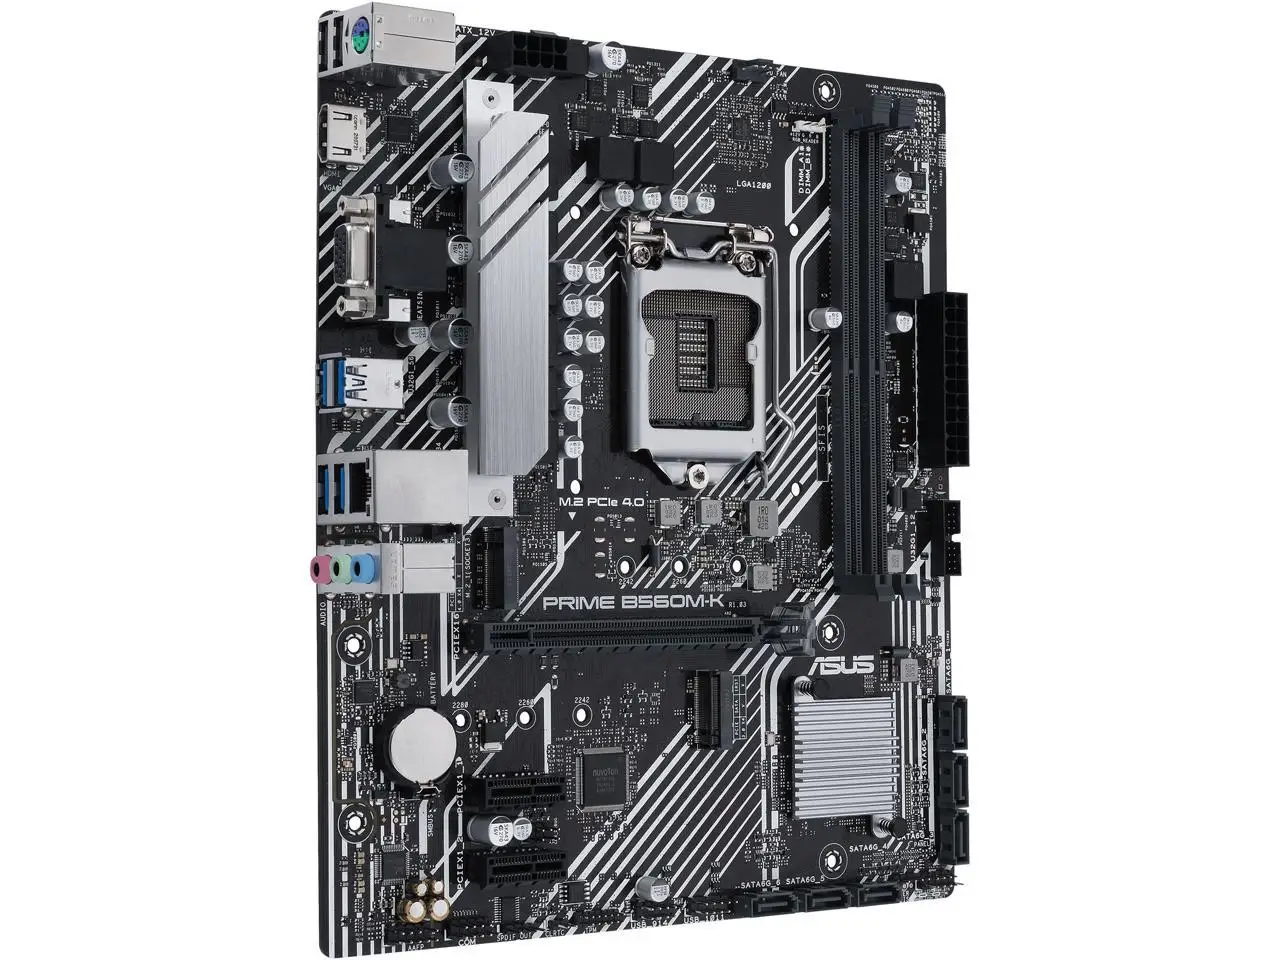 

For ASUS PRIME B560M-K Computer Motherboard LGA 1200 DDR4 64G For Intel B560 Desktop Mainboard M.2 NVME PCI-E 3.0 X16